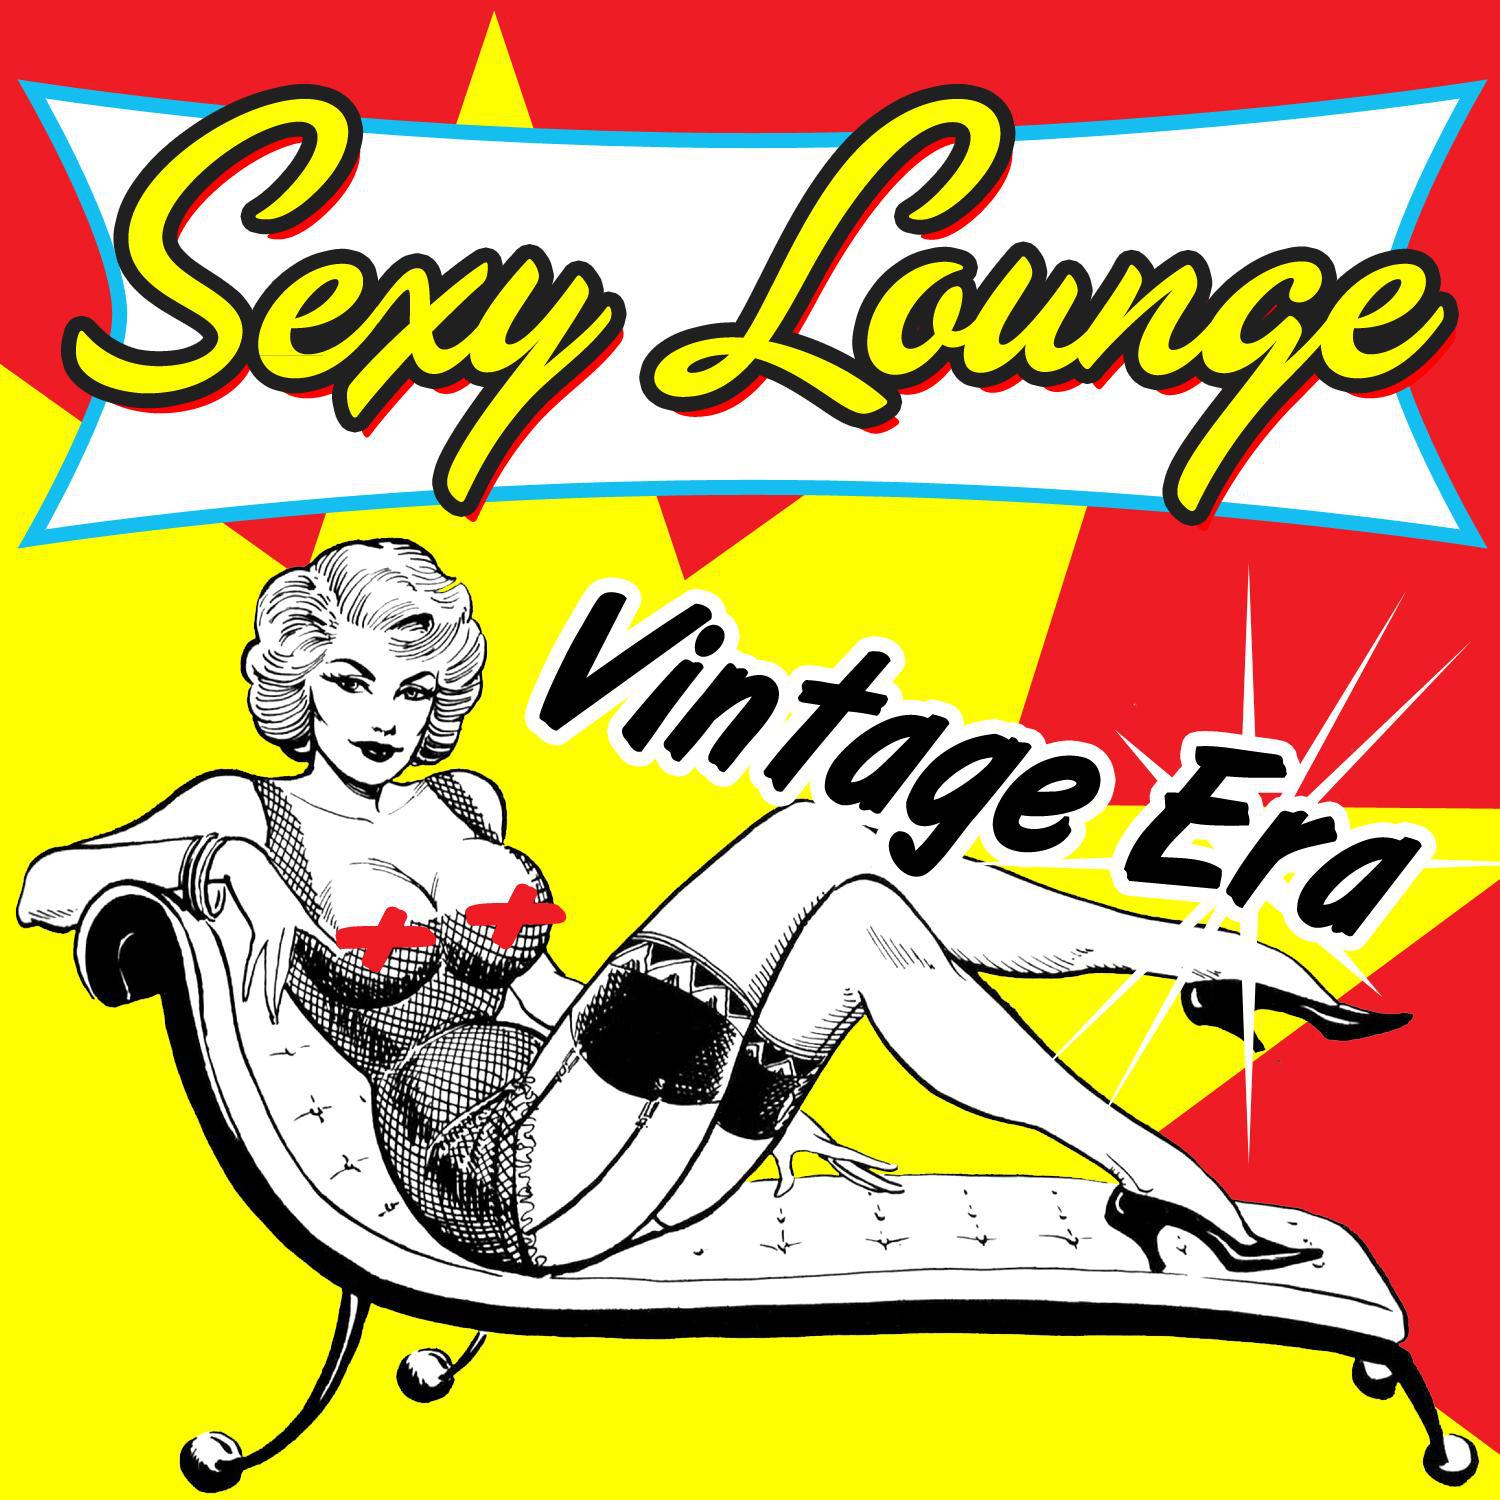 Sexy Lounge Vintage Era